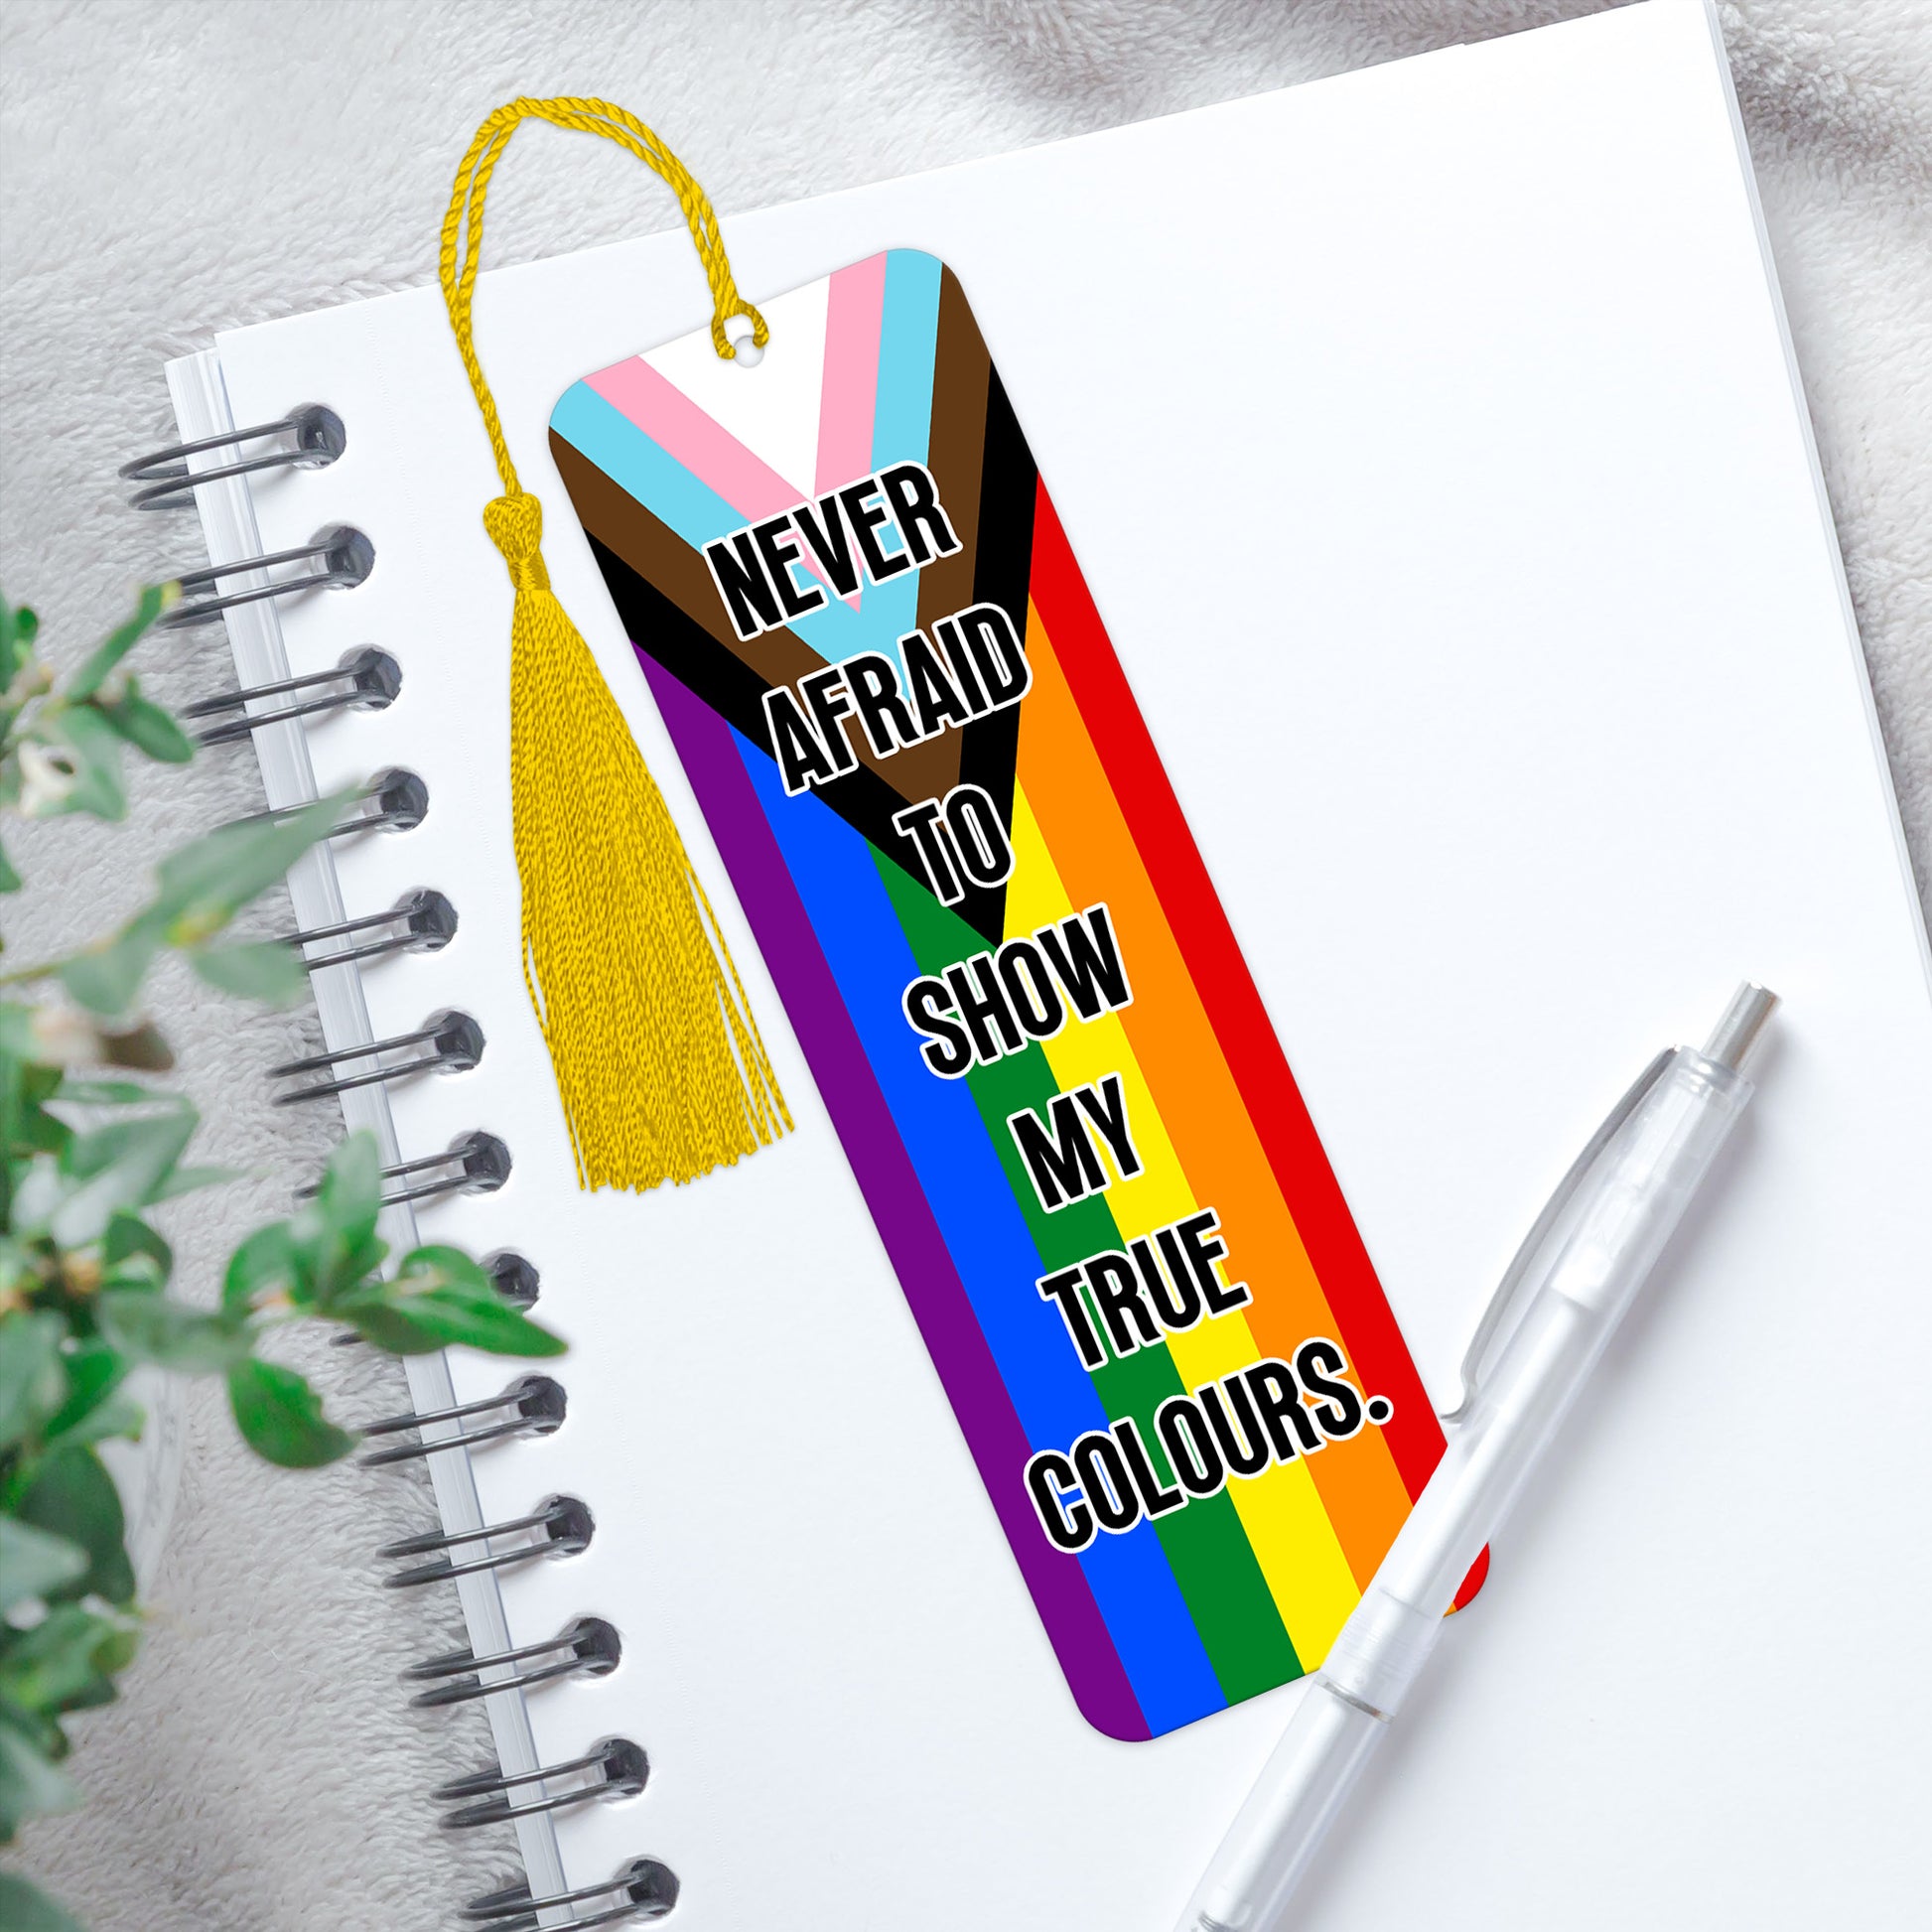 Gay progress pride luxury aluminium bookmark never afraid to show my true colours